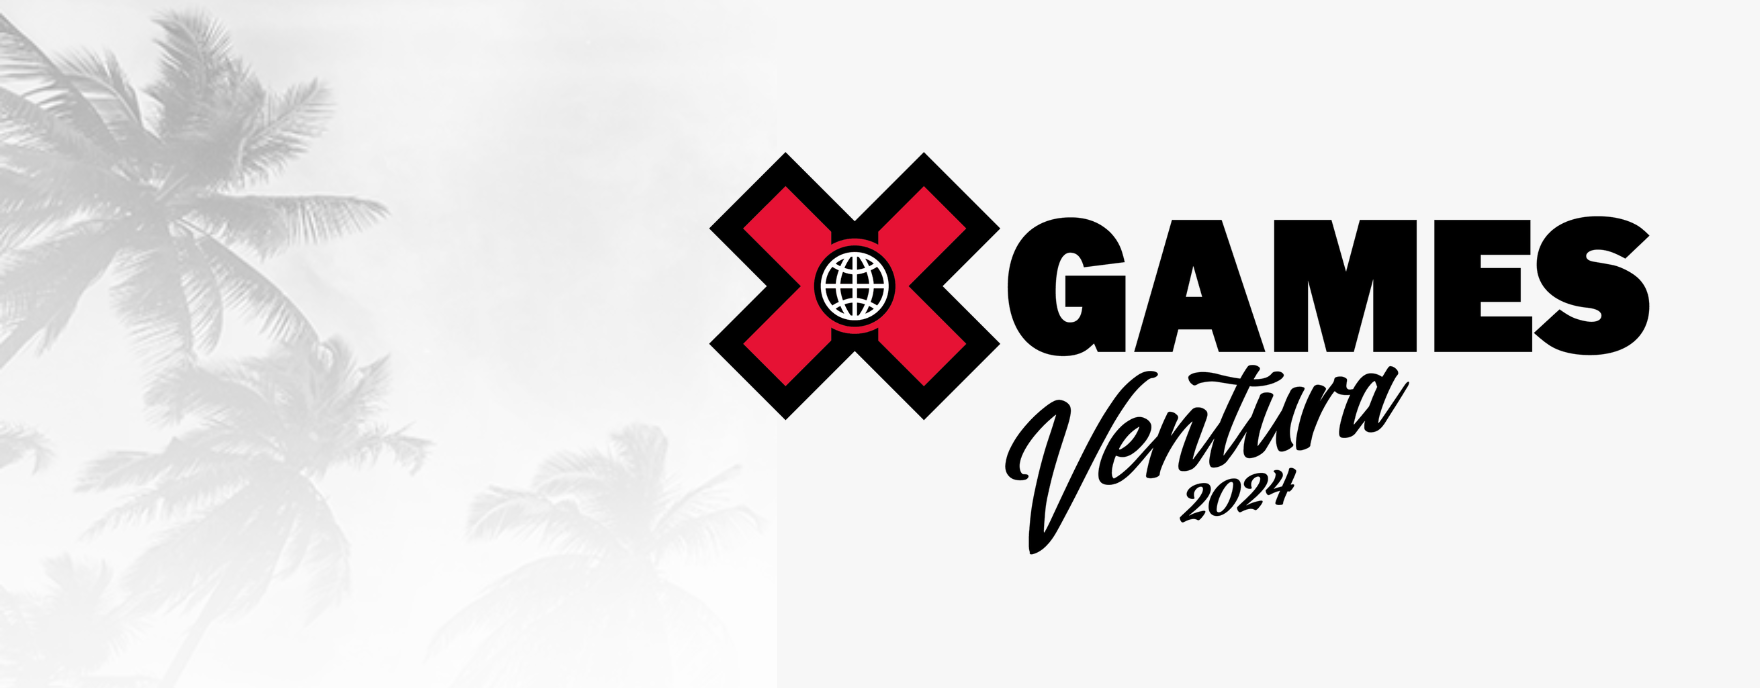 X Games Ventura